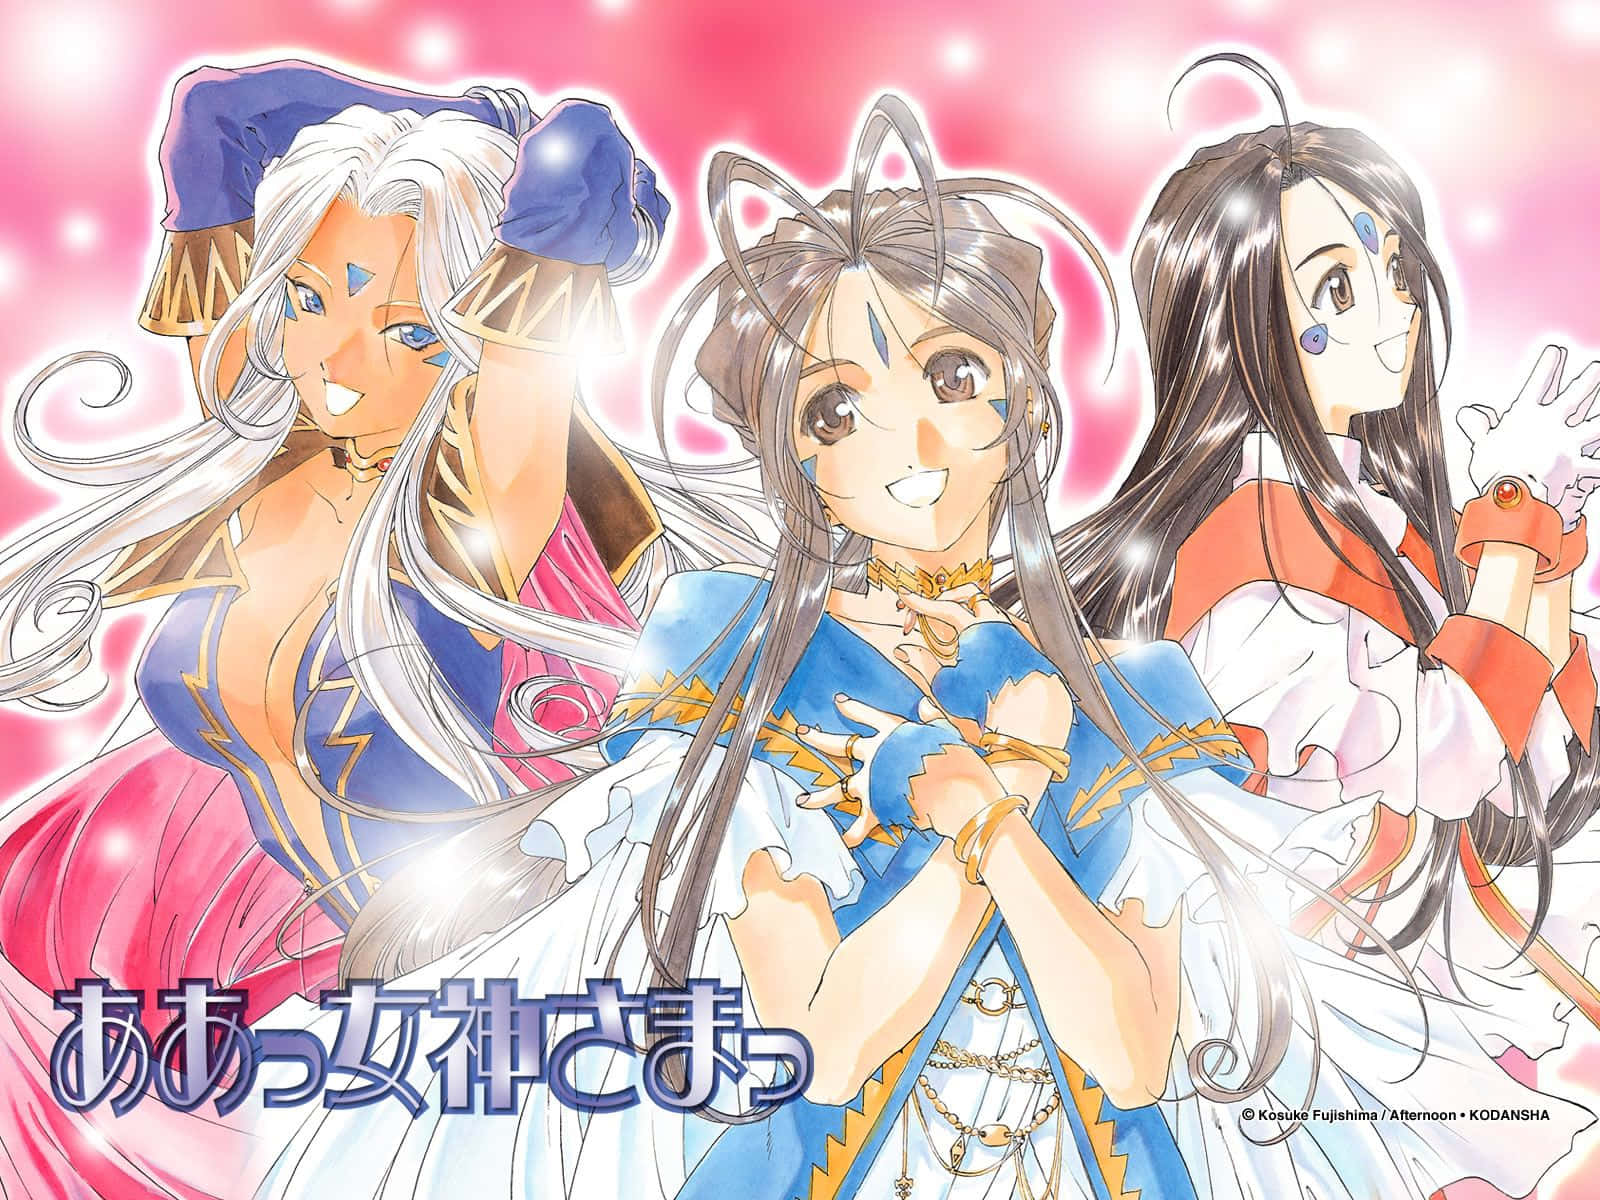 Three Goddesses Unite in the Anime Series Ah! My Goddess